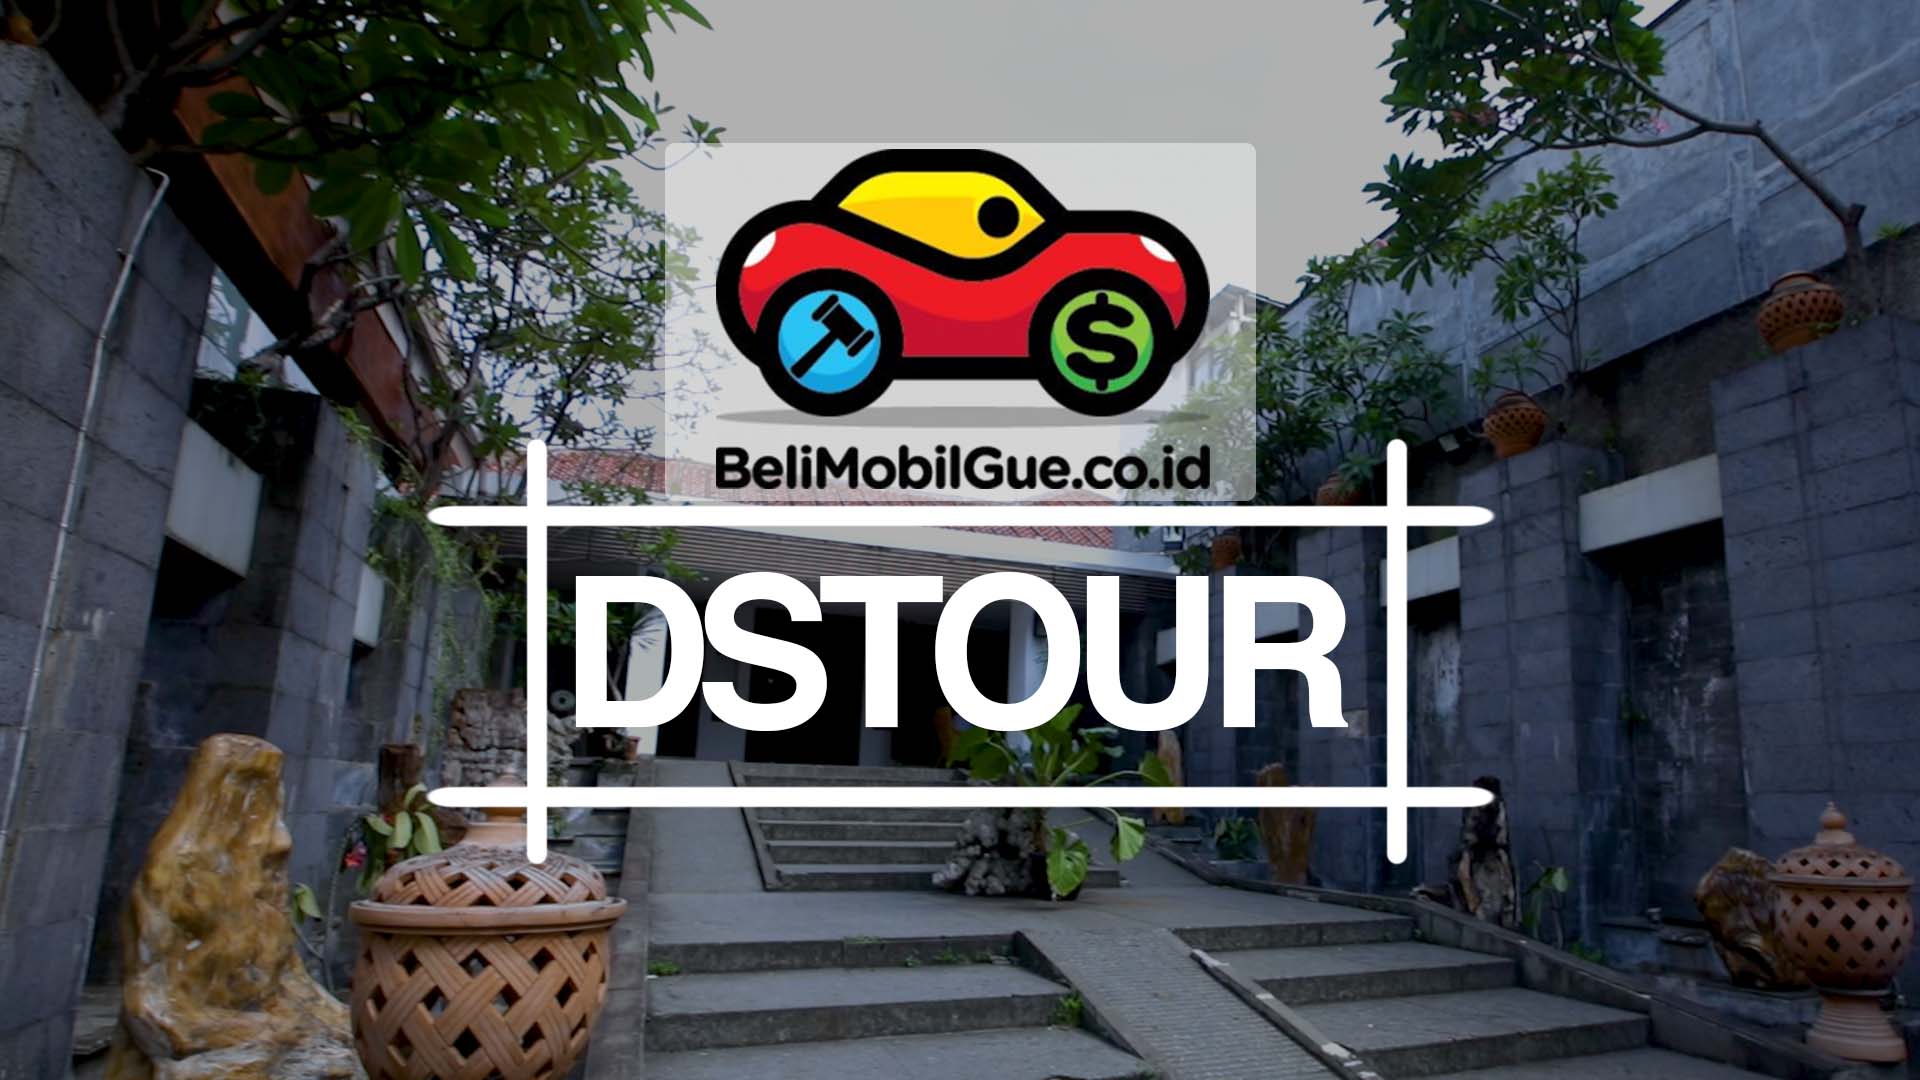 Kantor Belimobilgue / DStour